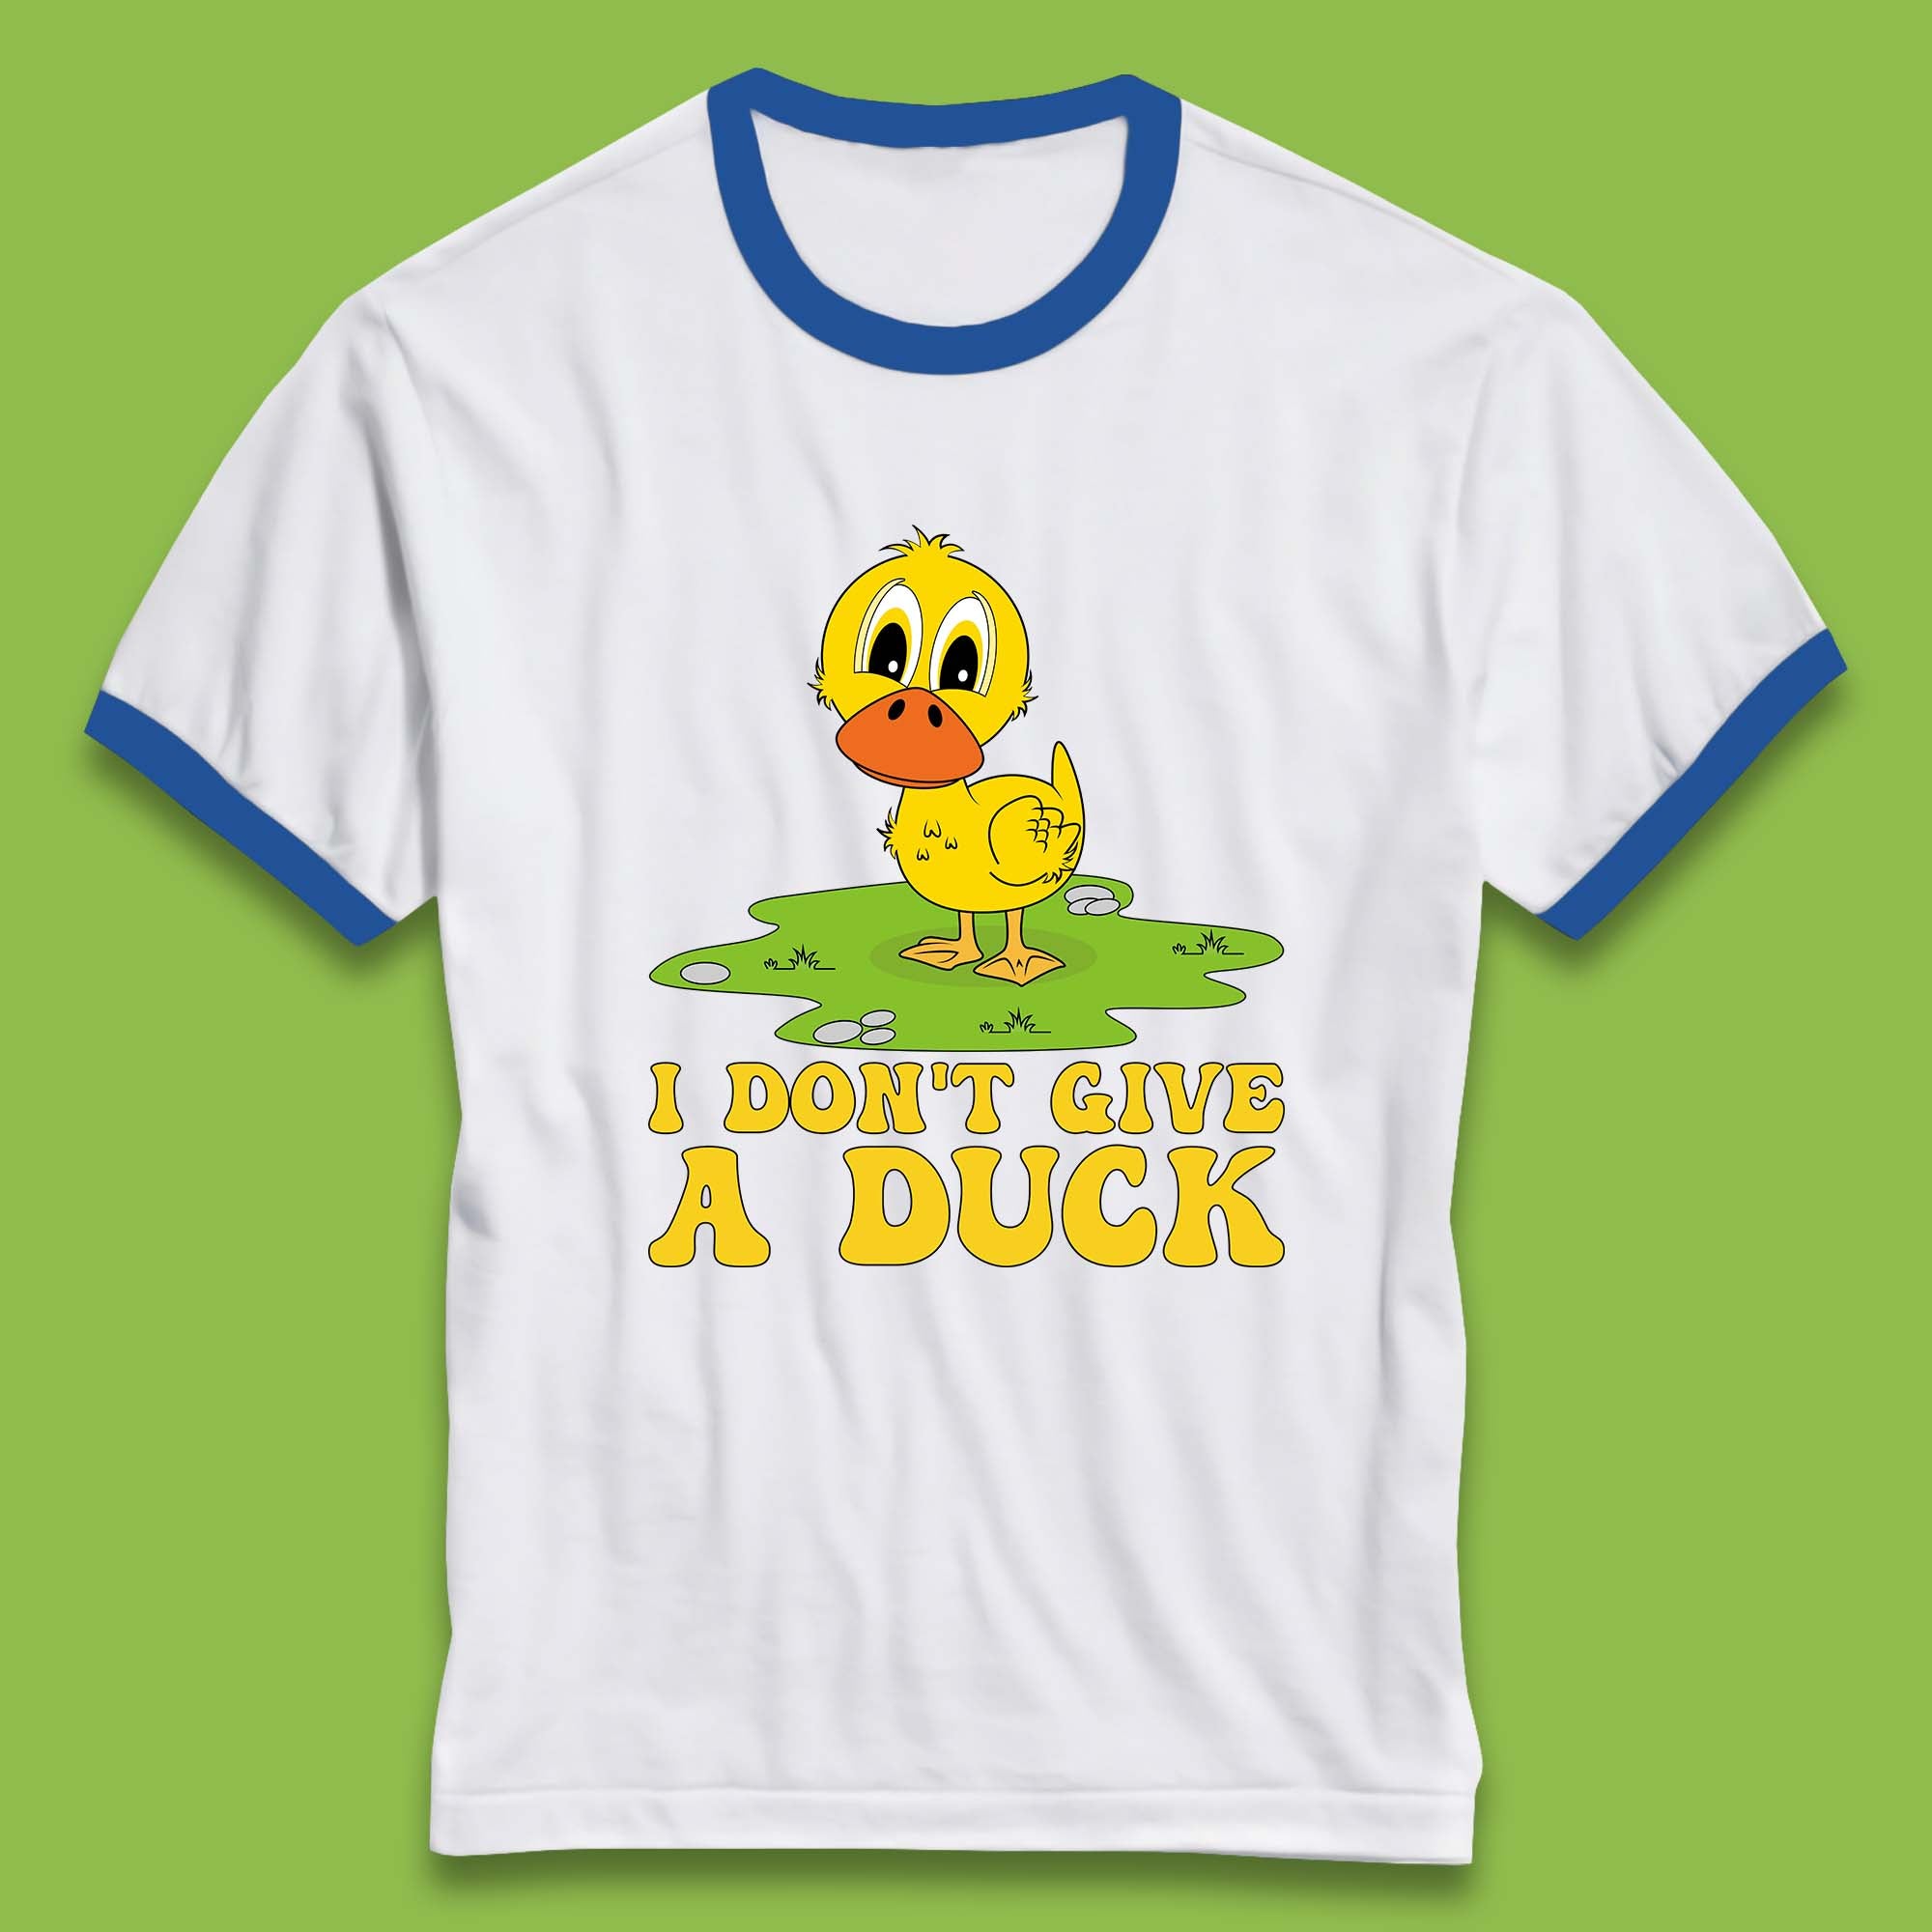 I Don't Give A Duck Funny Humor Rude Joke Novelty Ringer T Shirt